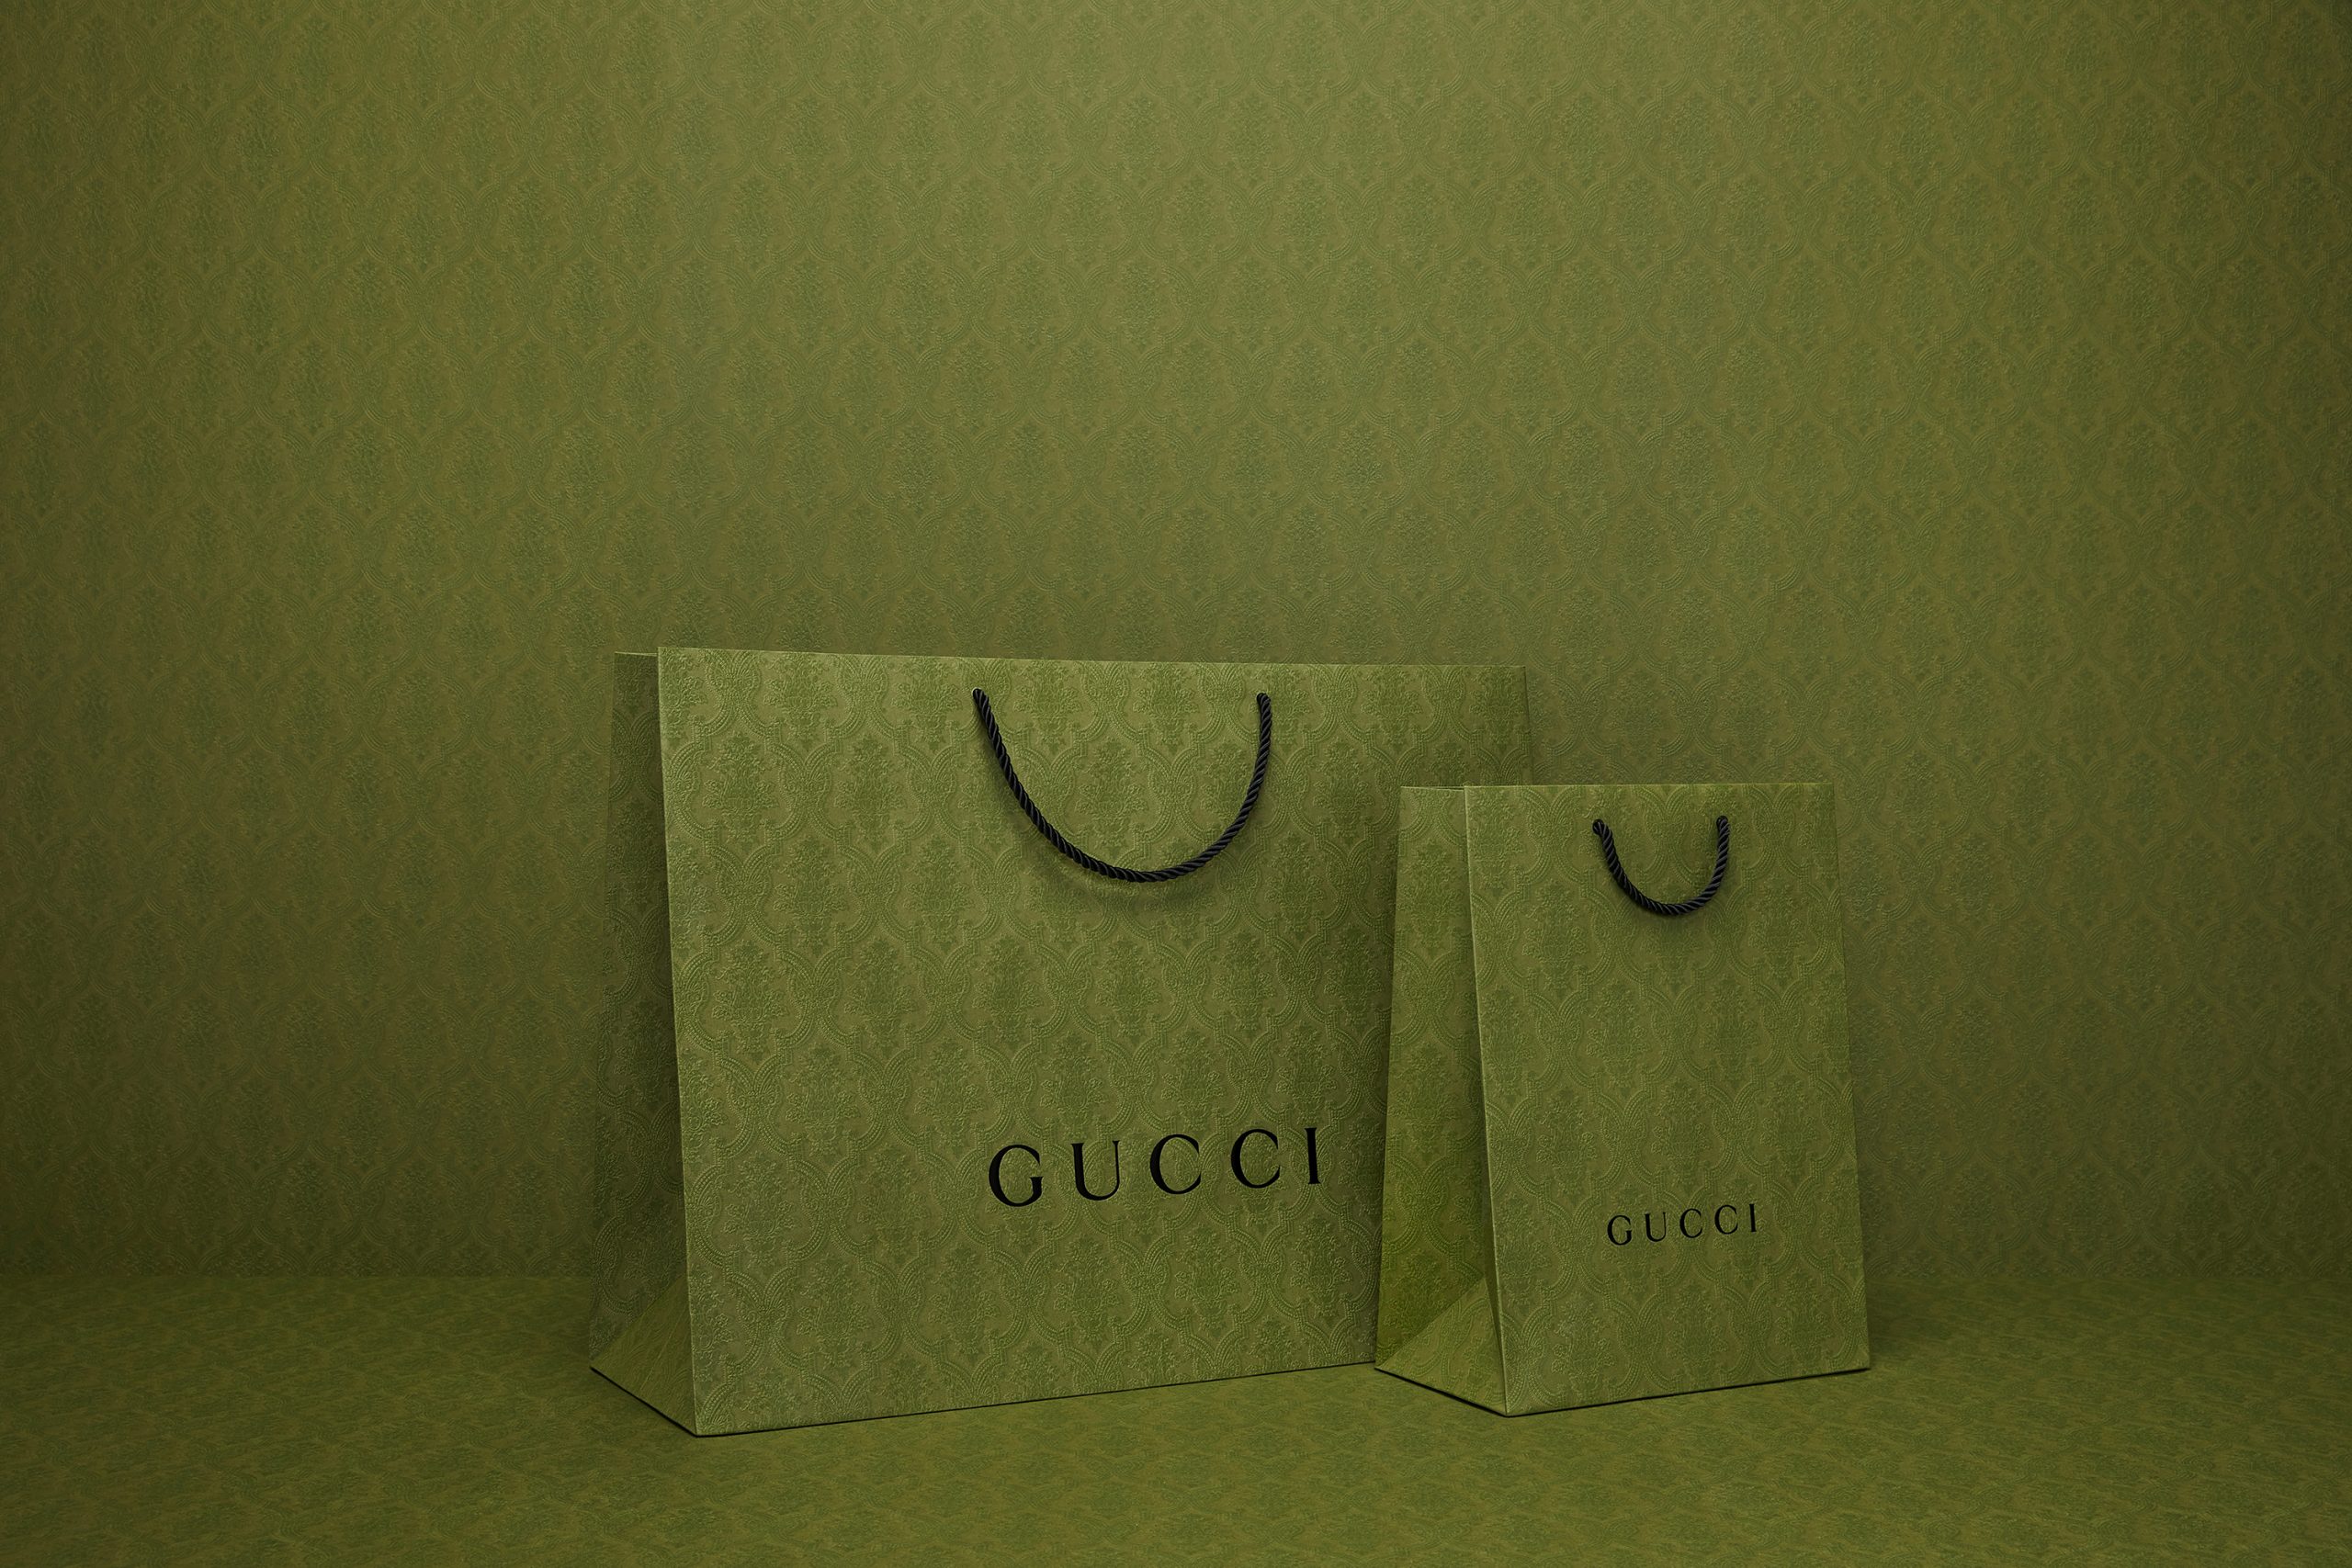 new gucci shopping bag